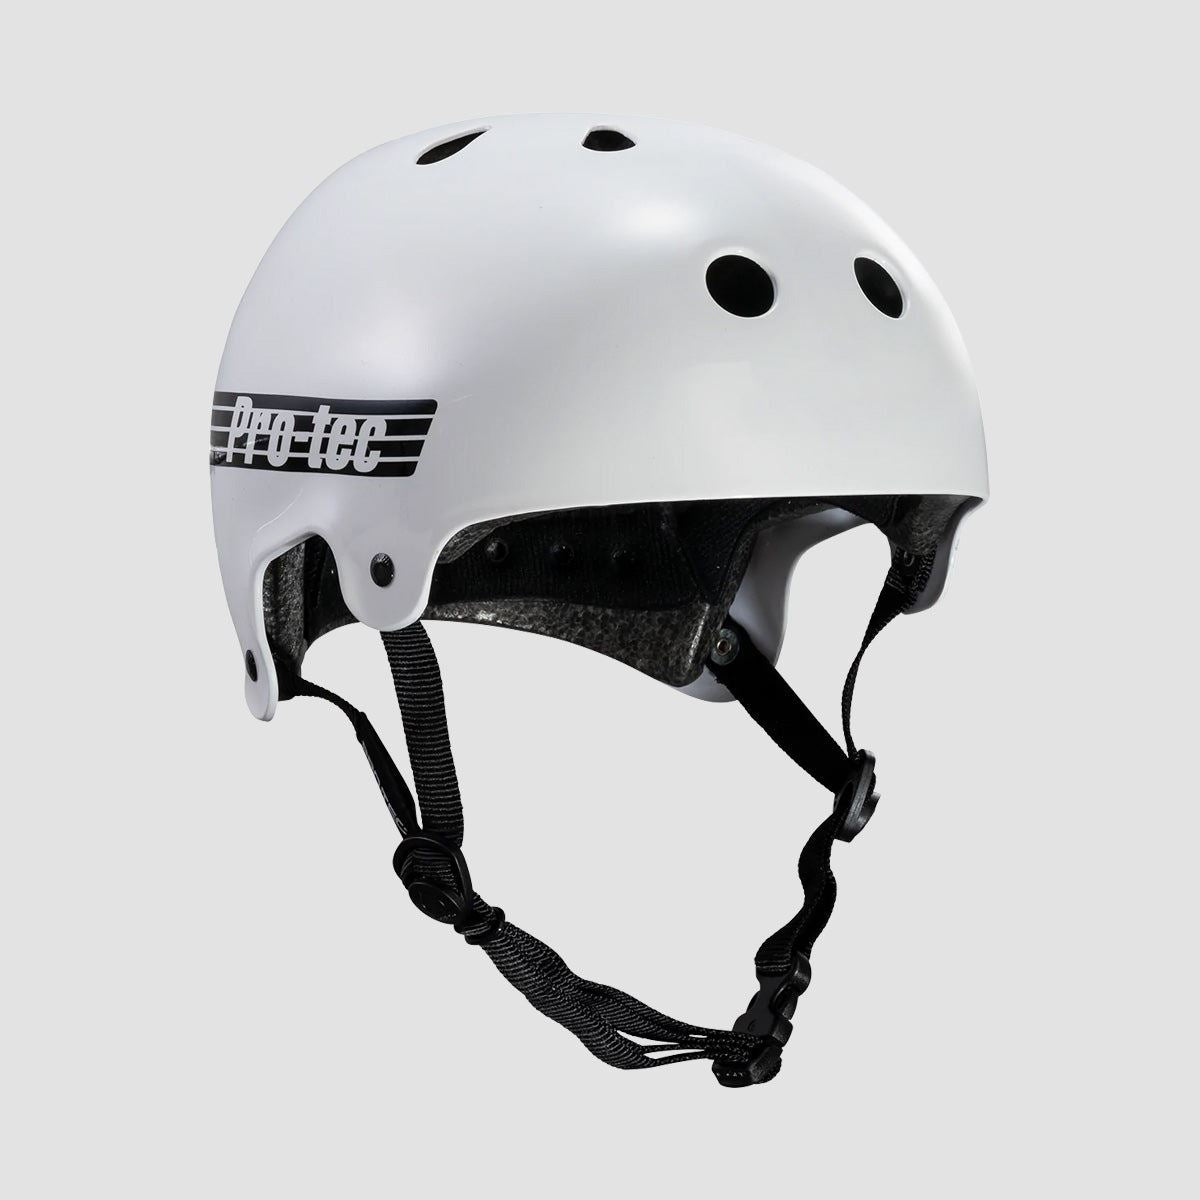 Protec Old School Certified Helmet Gloss White